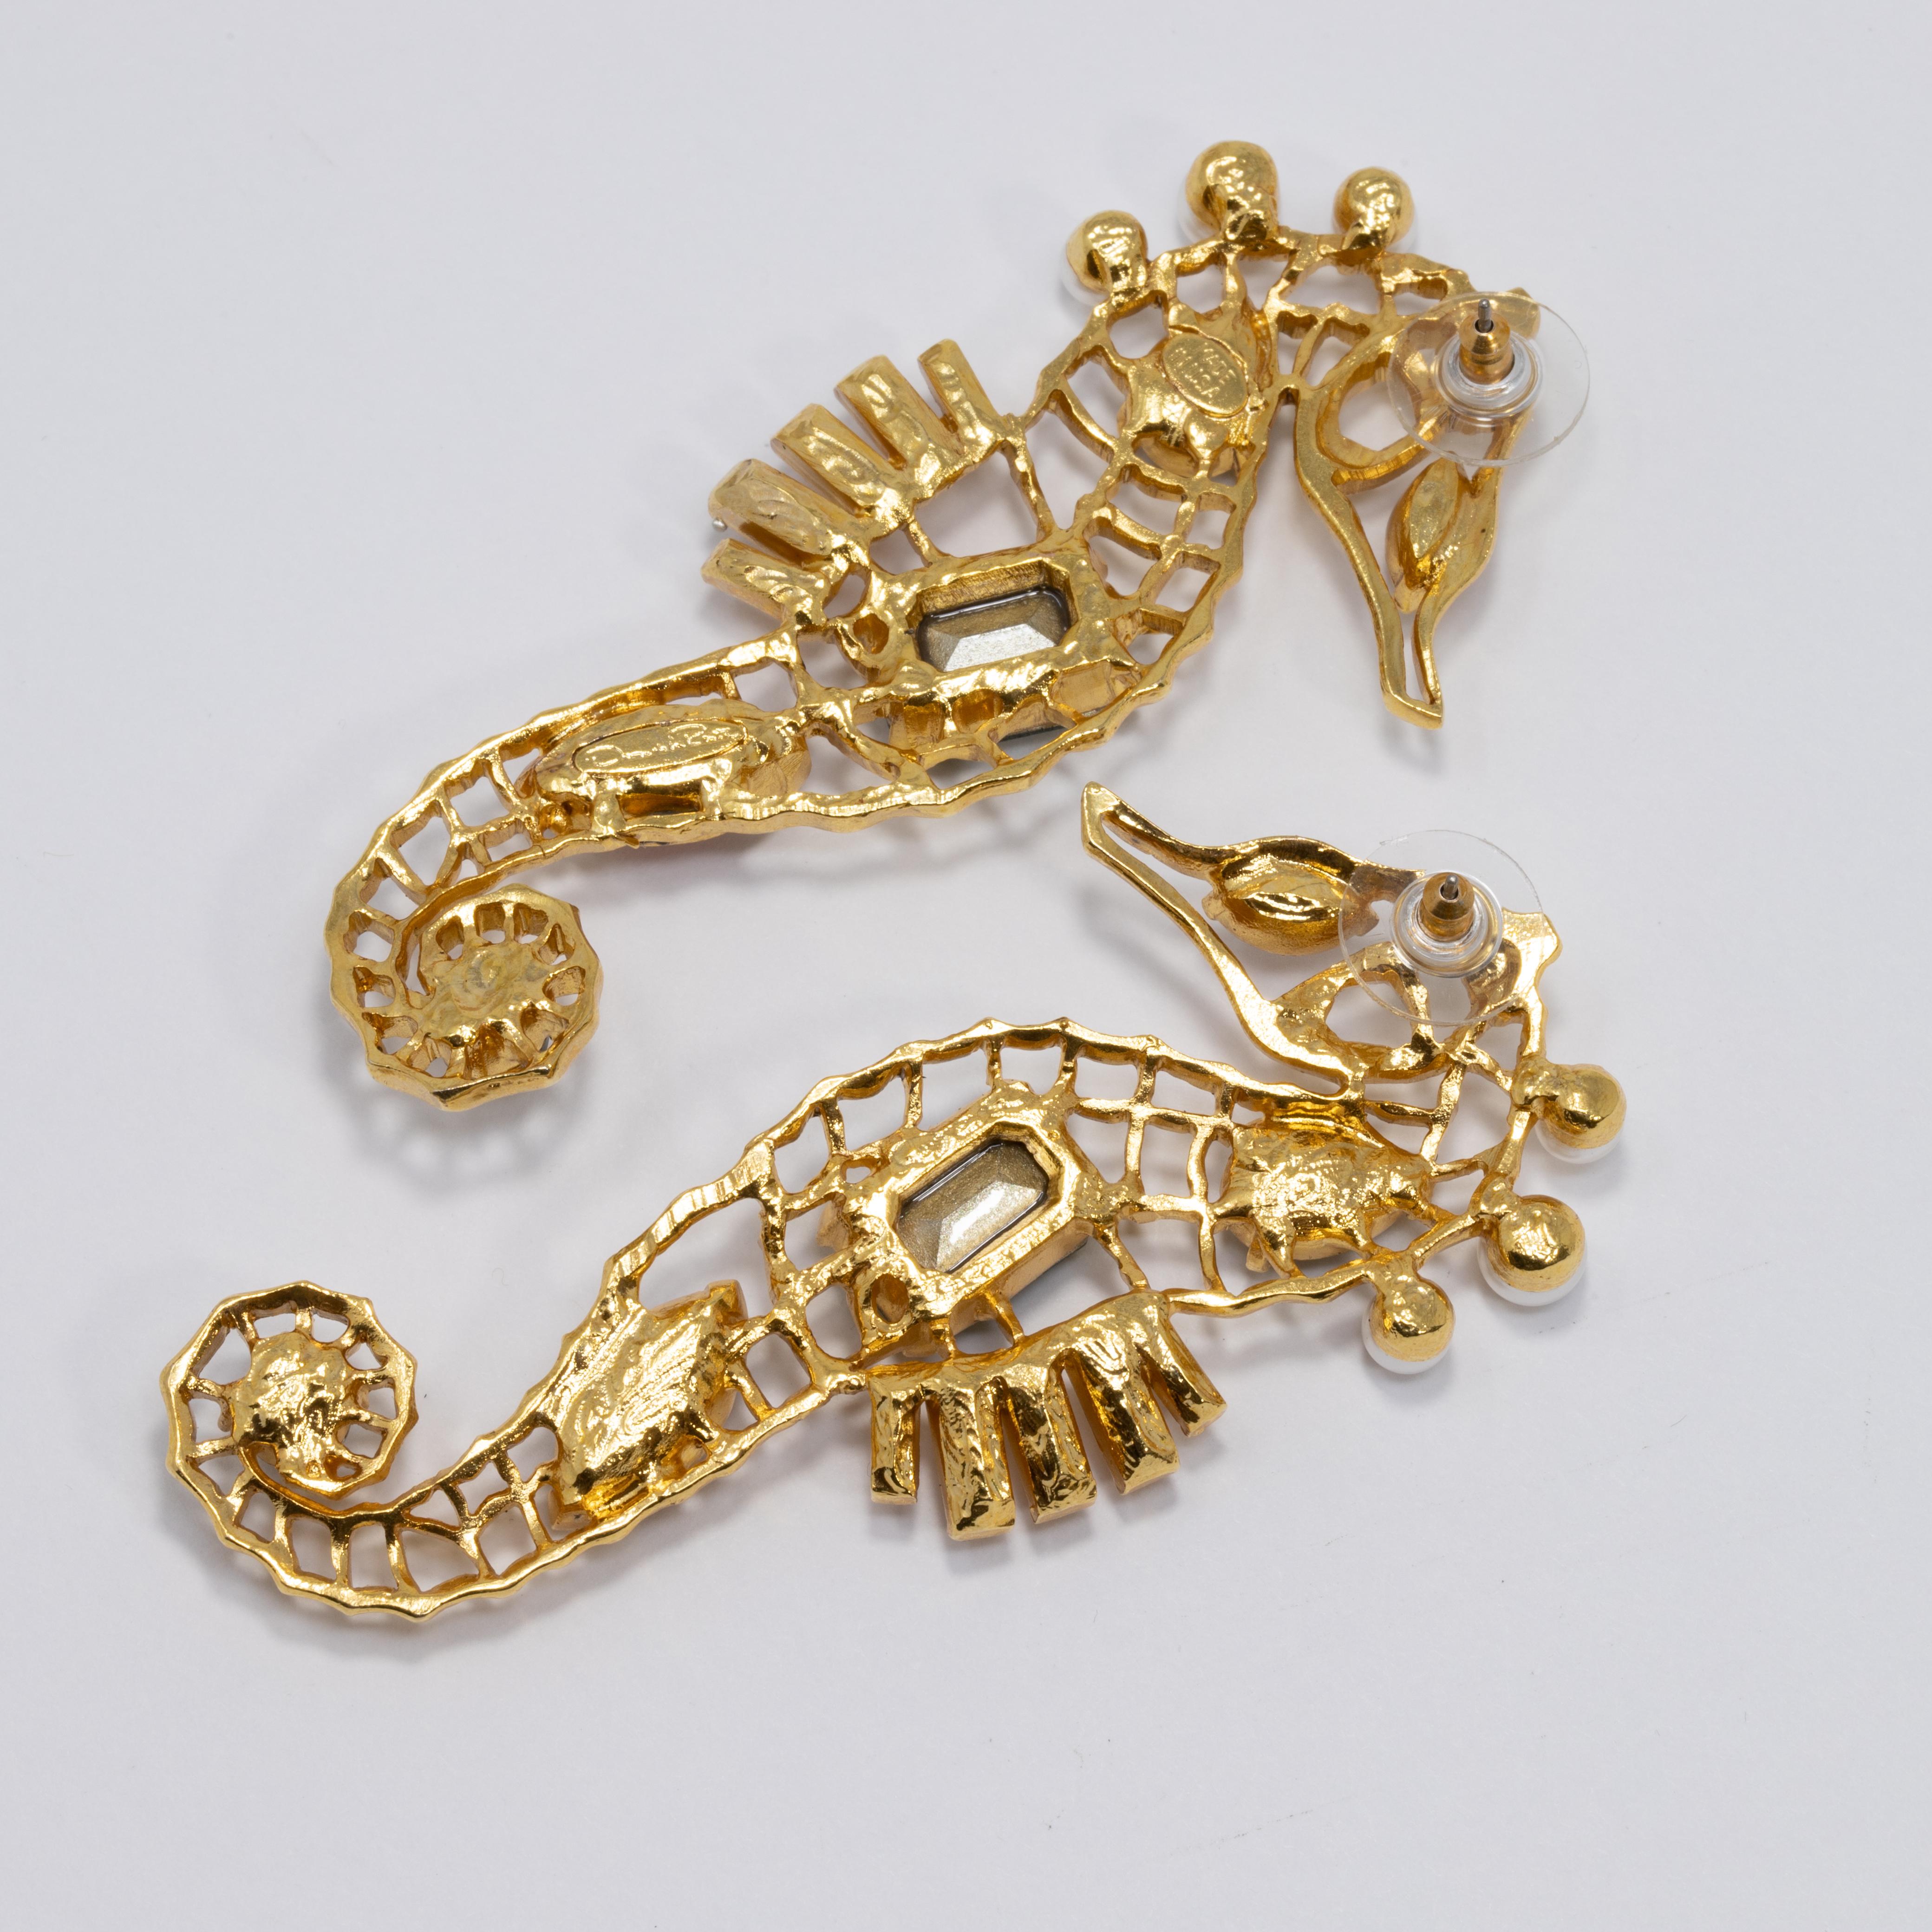 Brilliant Cut Oscar de la Renta Jeweled Seahorse Earrings in Gold, Green Reed and Blue Crystal